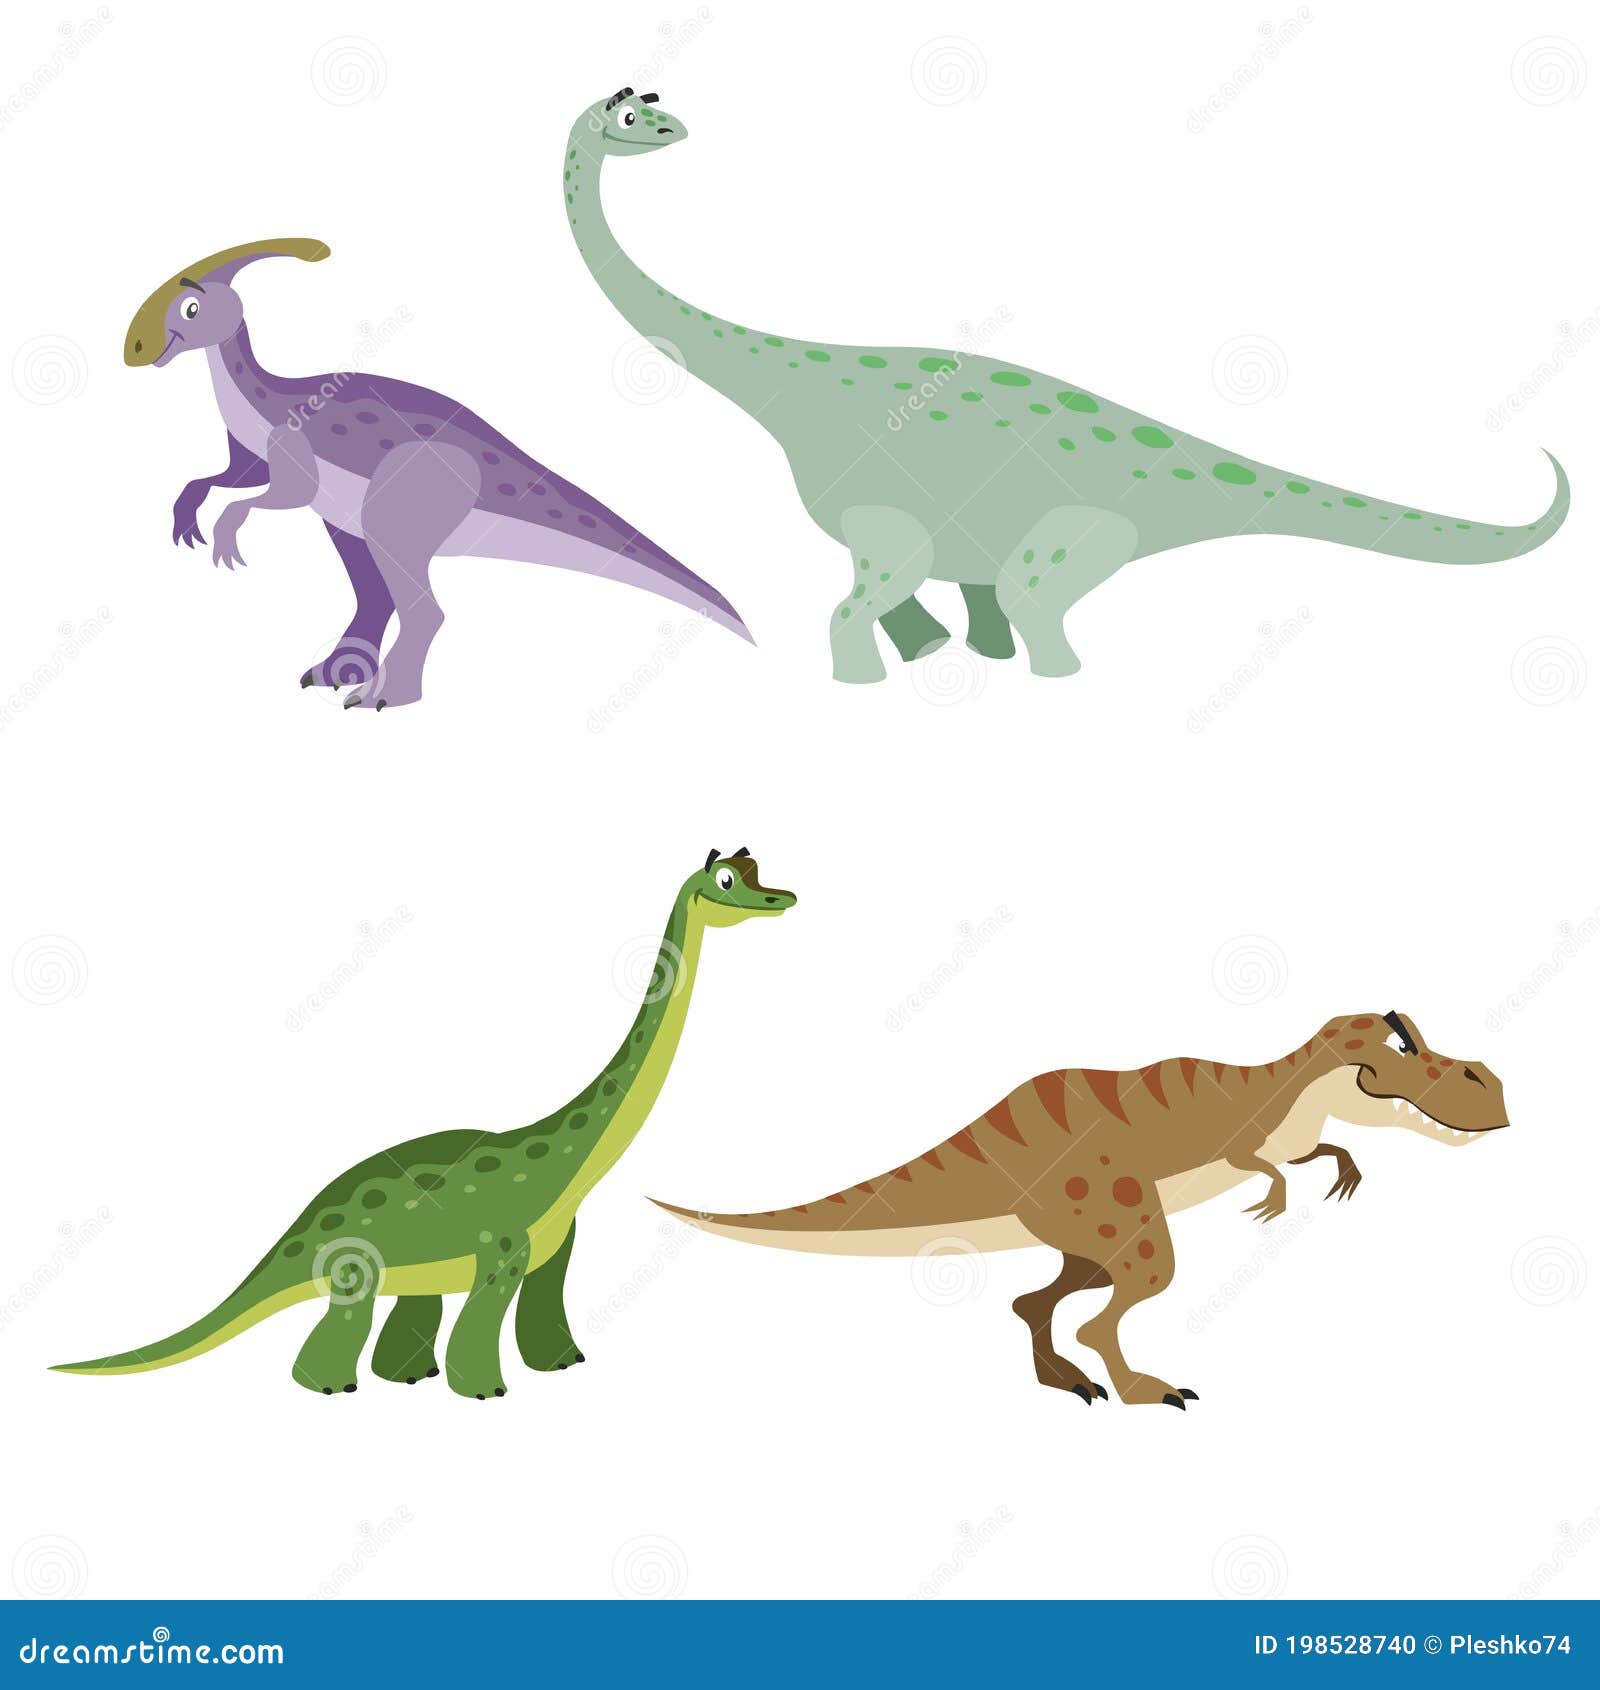 cartoon dinosaurs set. parasaurolophus, brontosaurus, brachiosaurus and tyrannosaurus rex. herbivore and carnivore dinosaurs colle